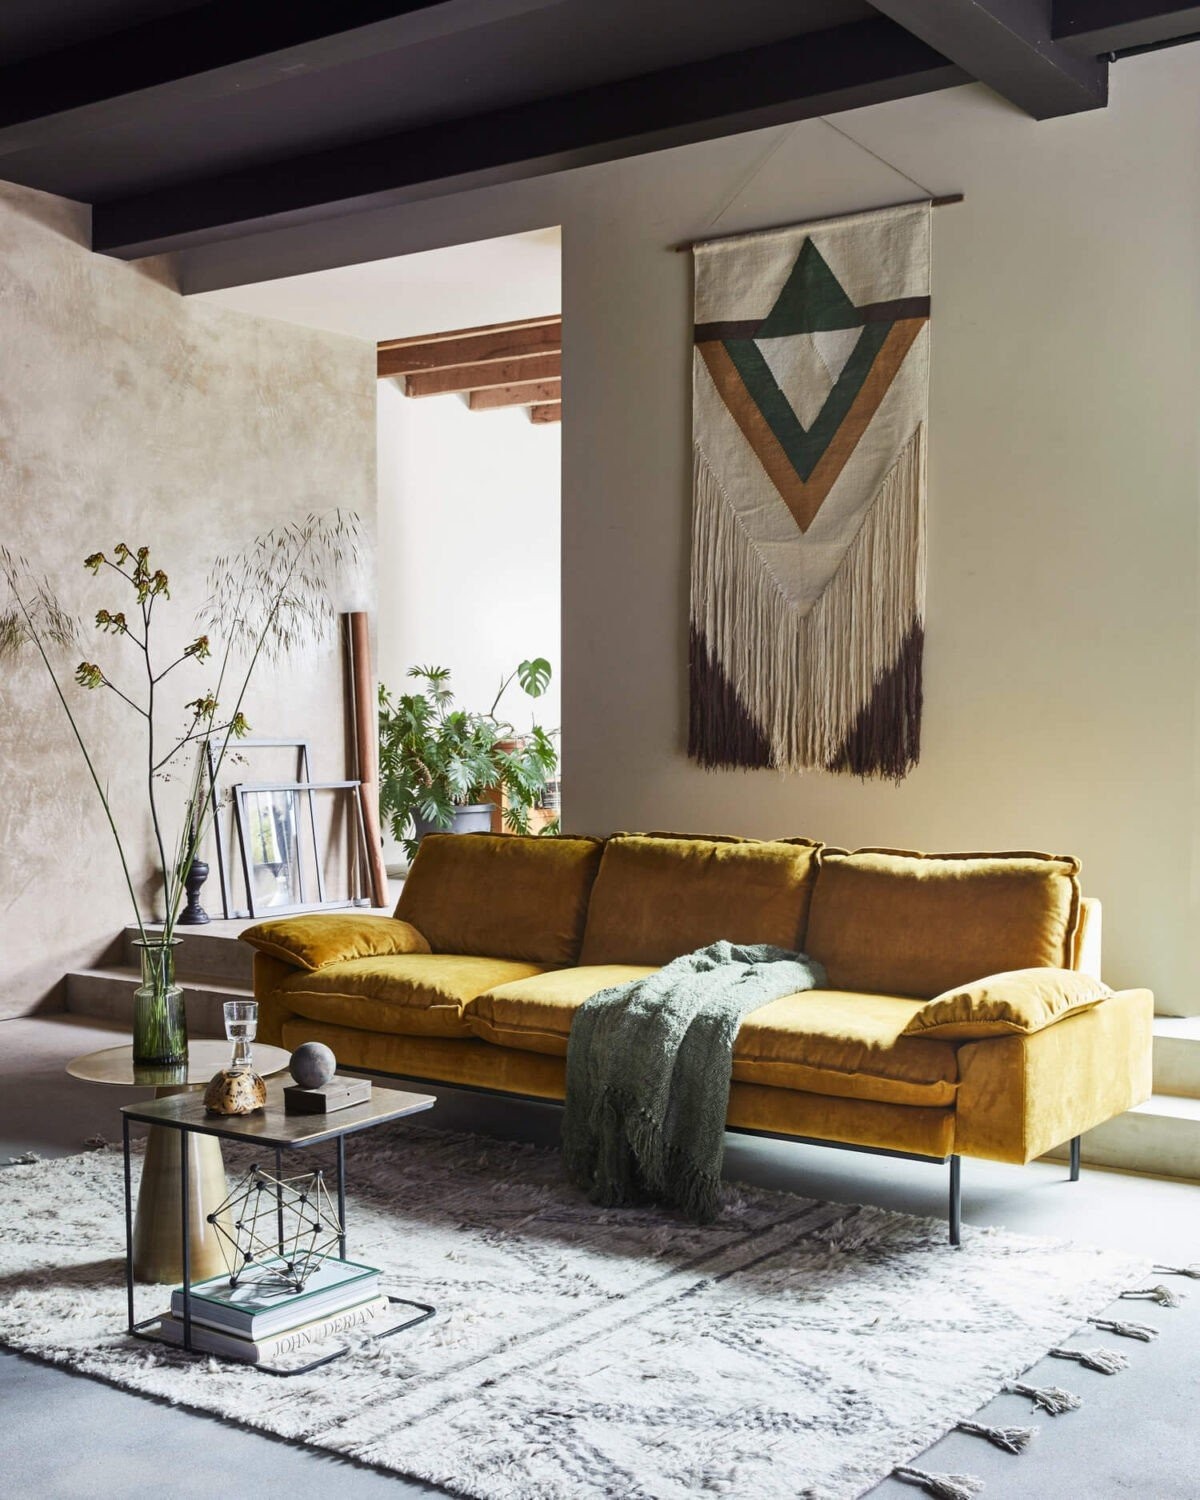 mustard-yellow-home-decor-inspiration-nordroom-1200x1500.jpg